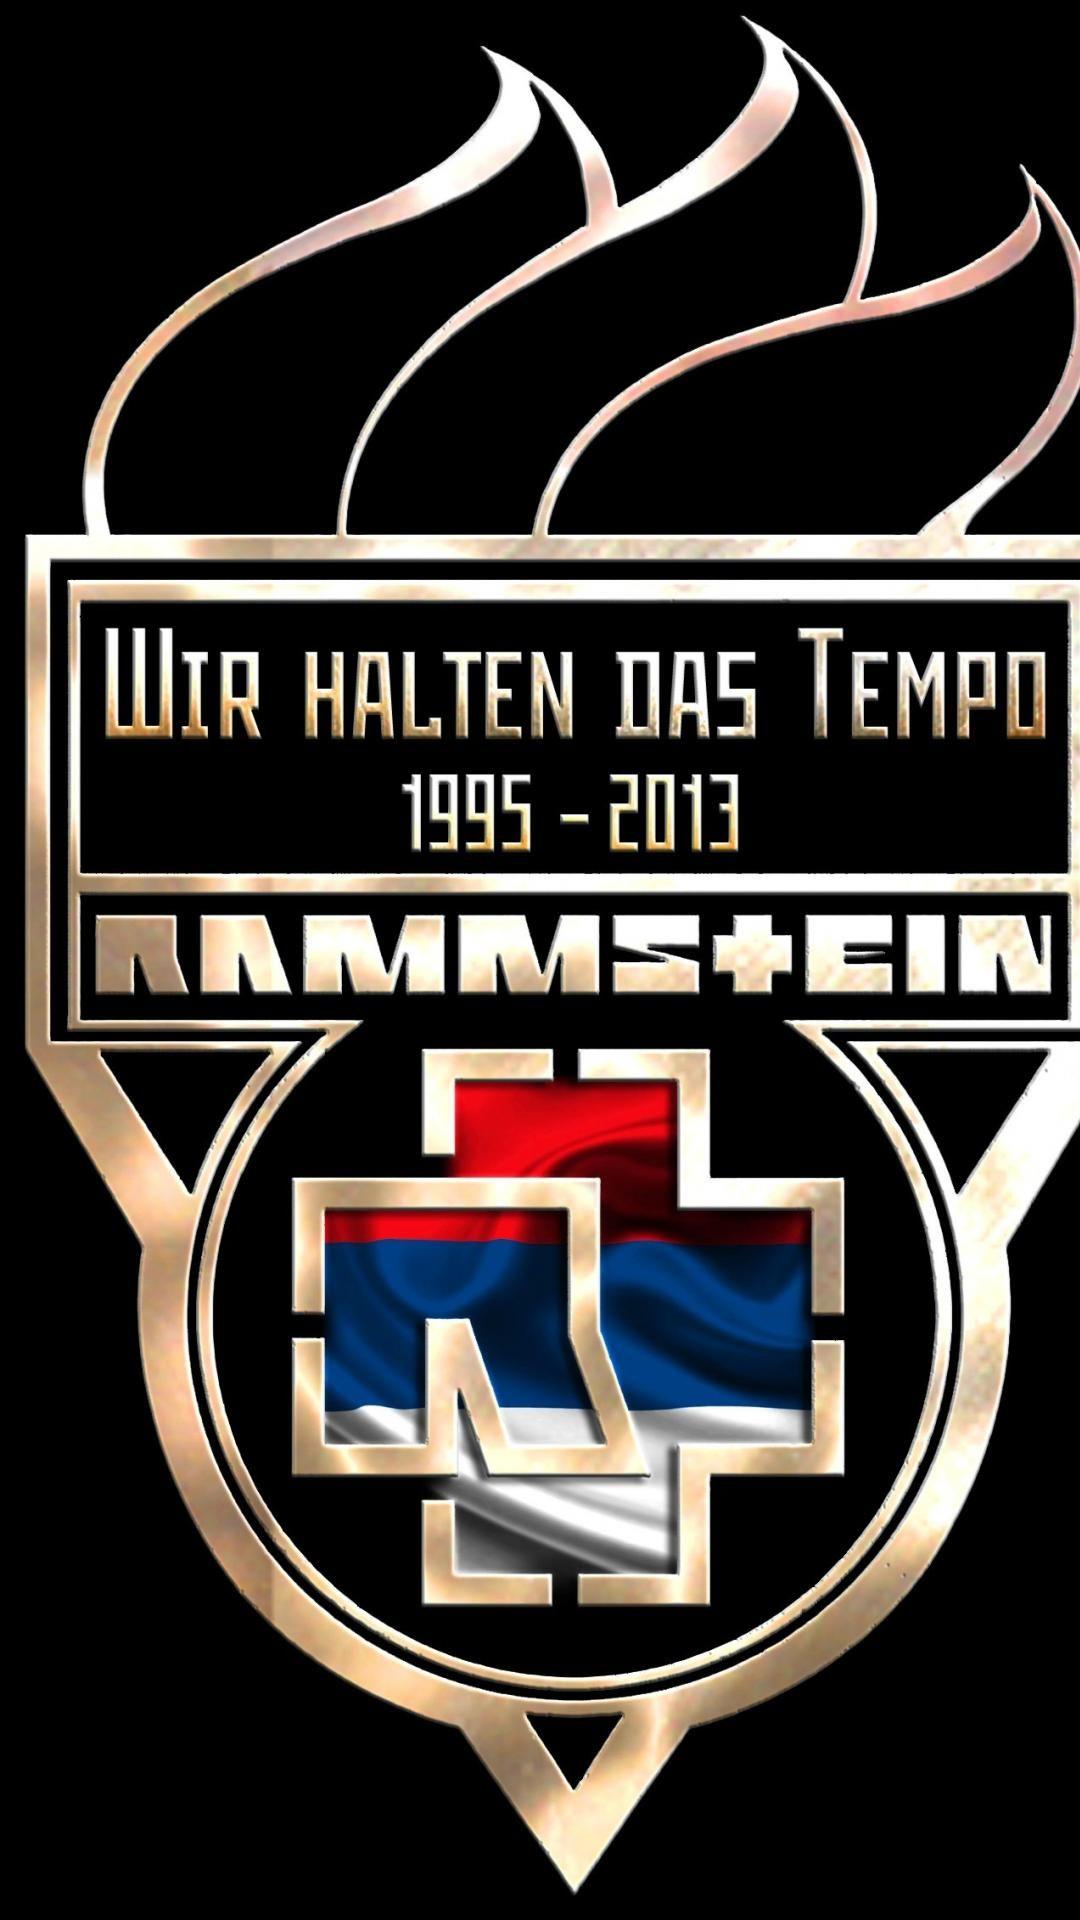 Rammstein serbia logos wallpaper